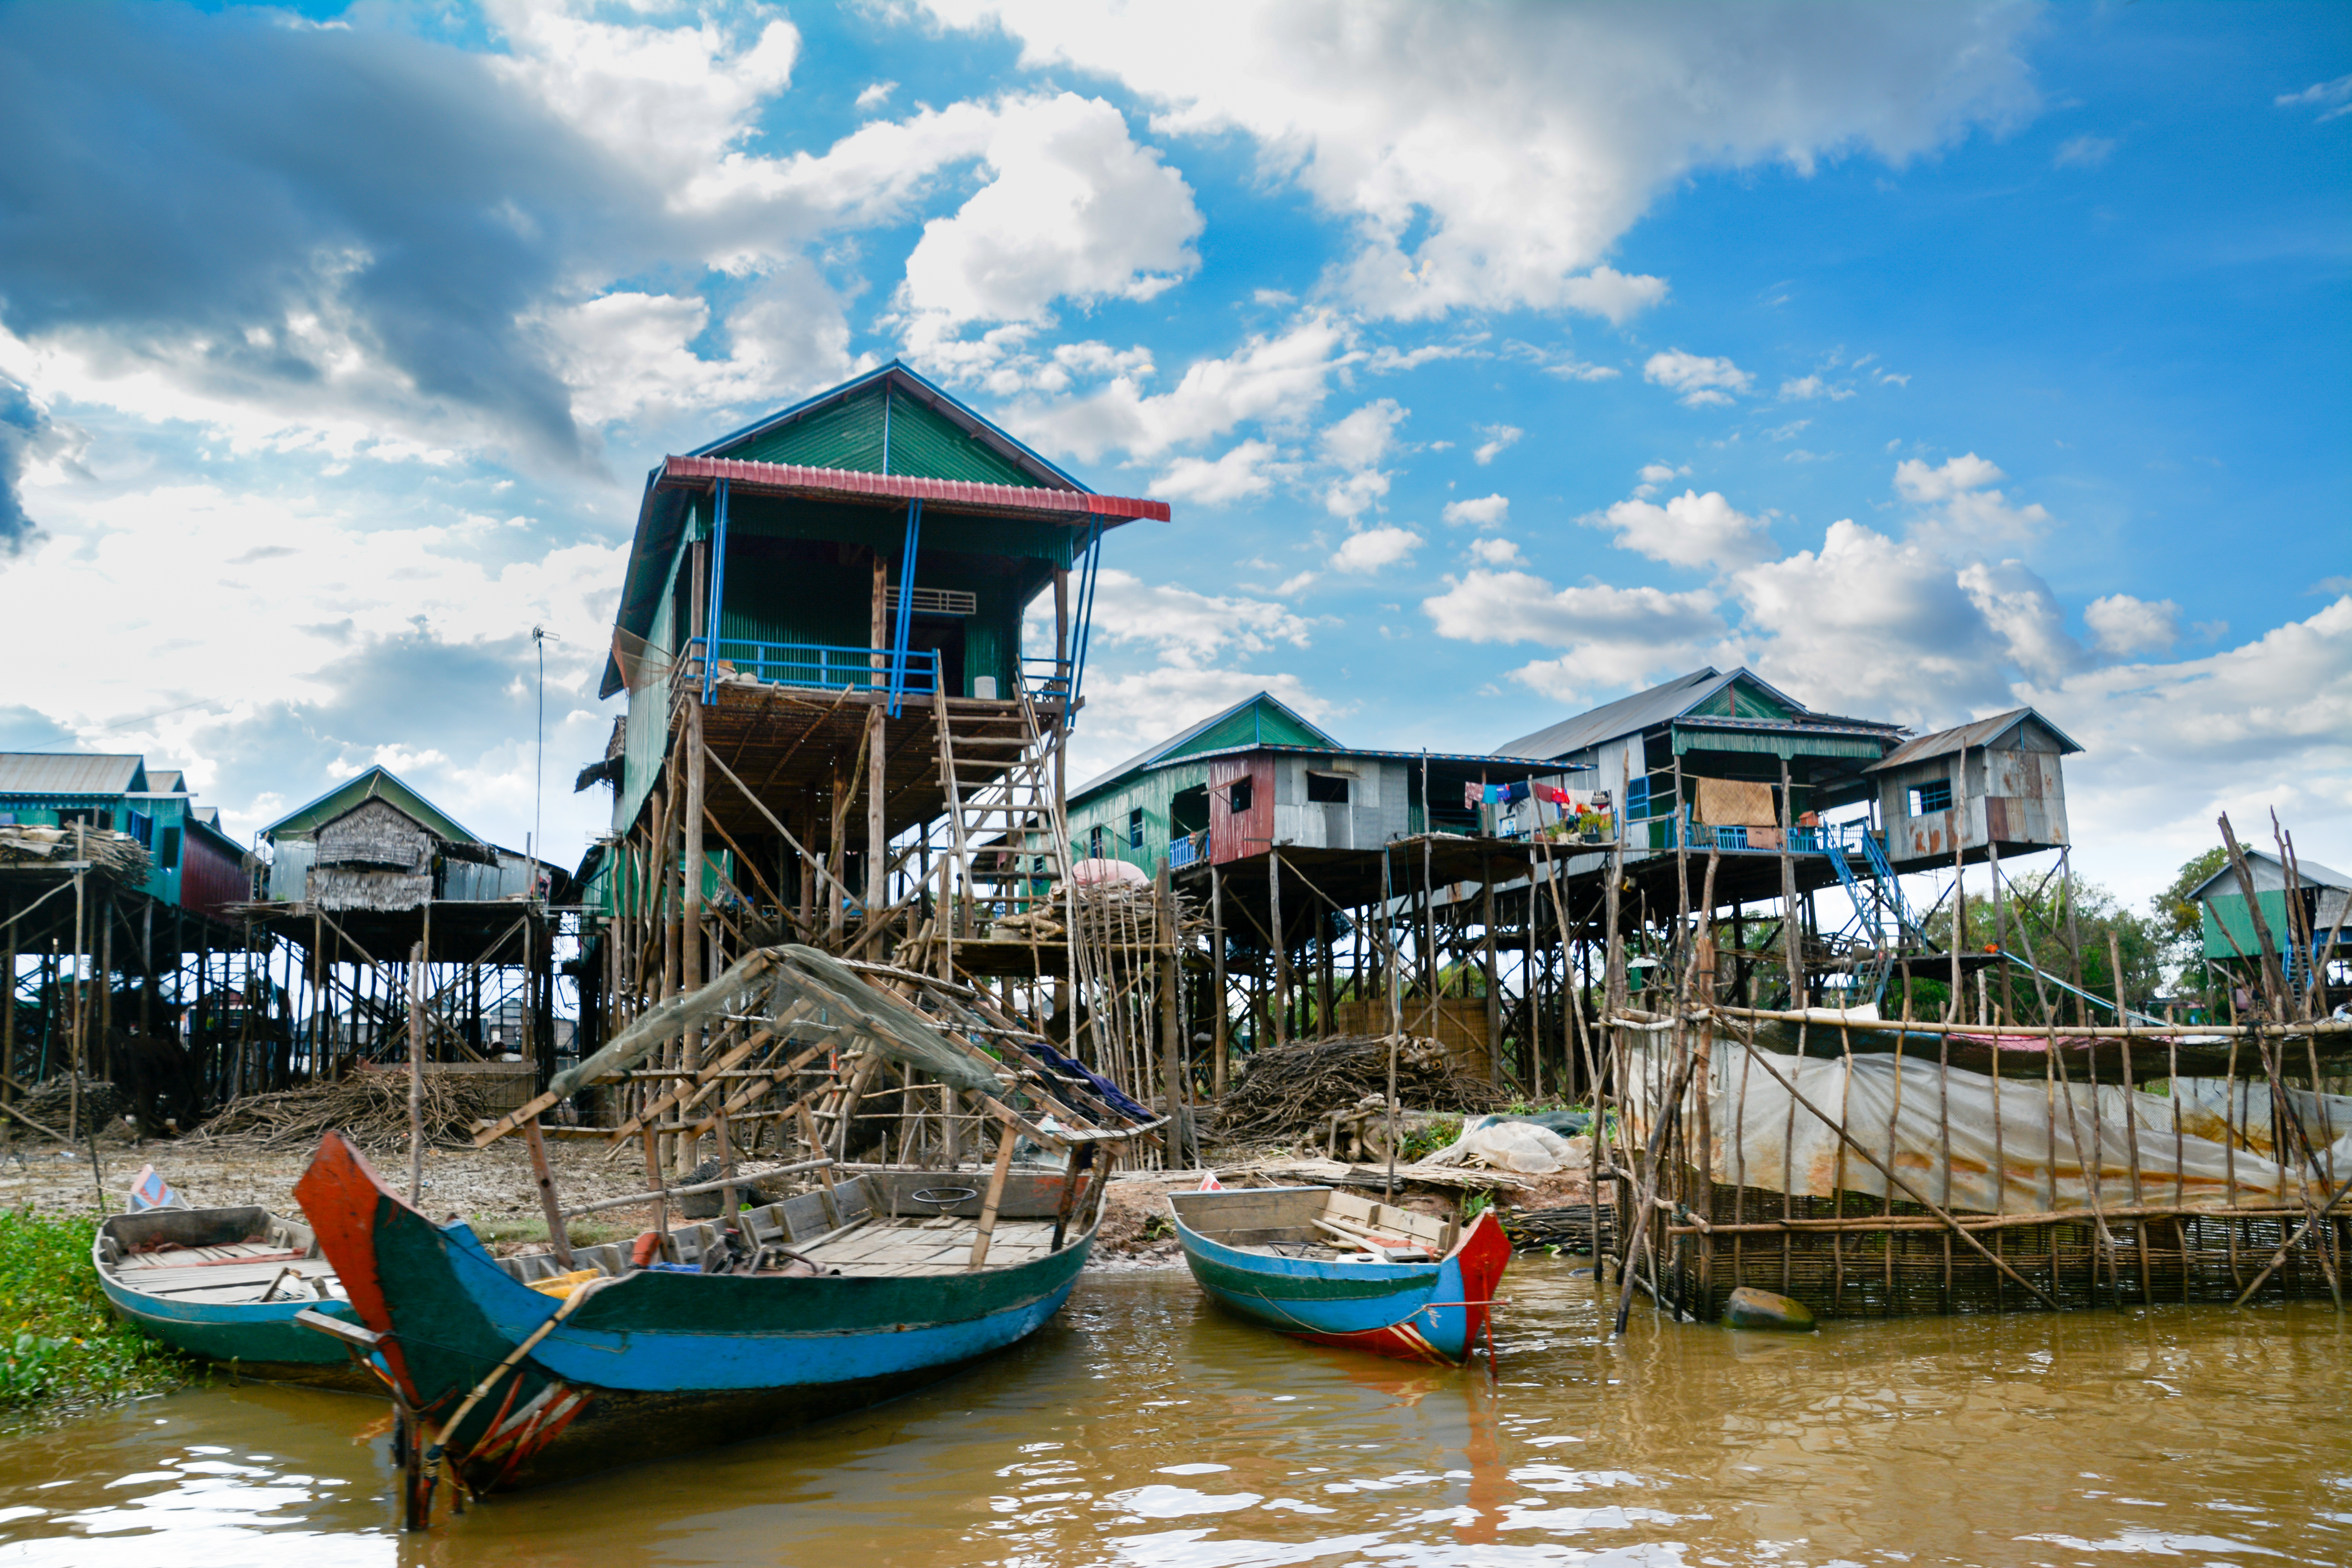 Stilted Houses in Tonle Sap Lake Fishing Village, Cambodia.